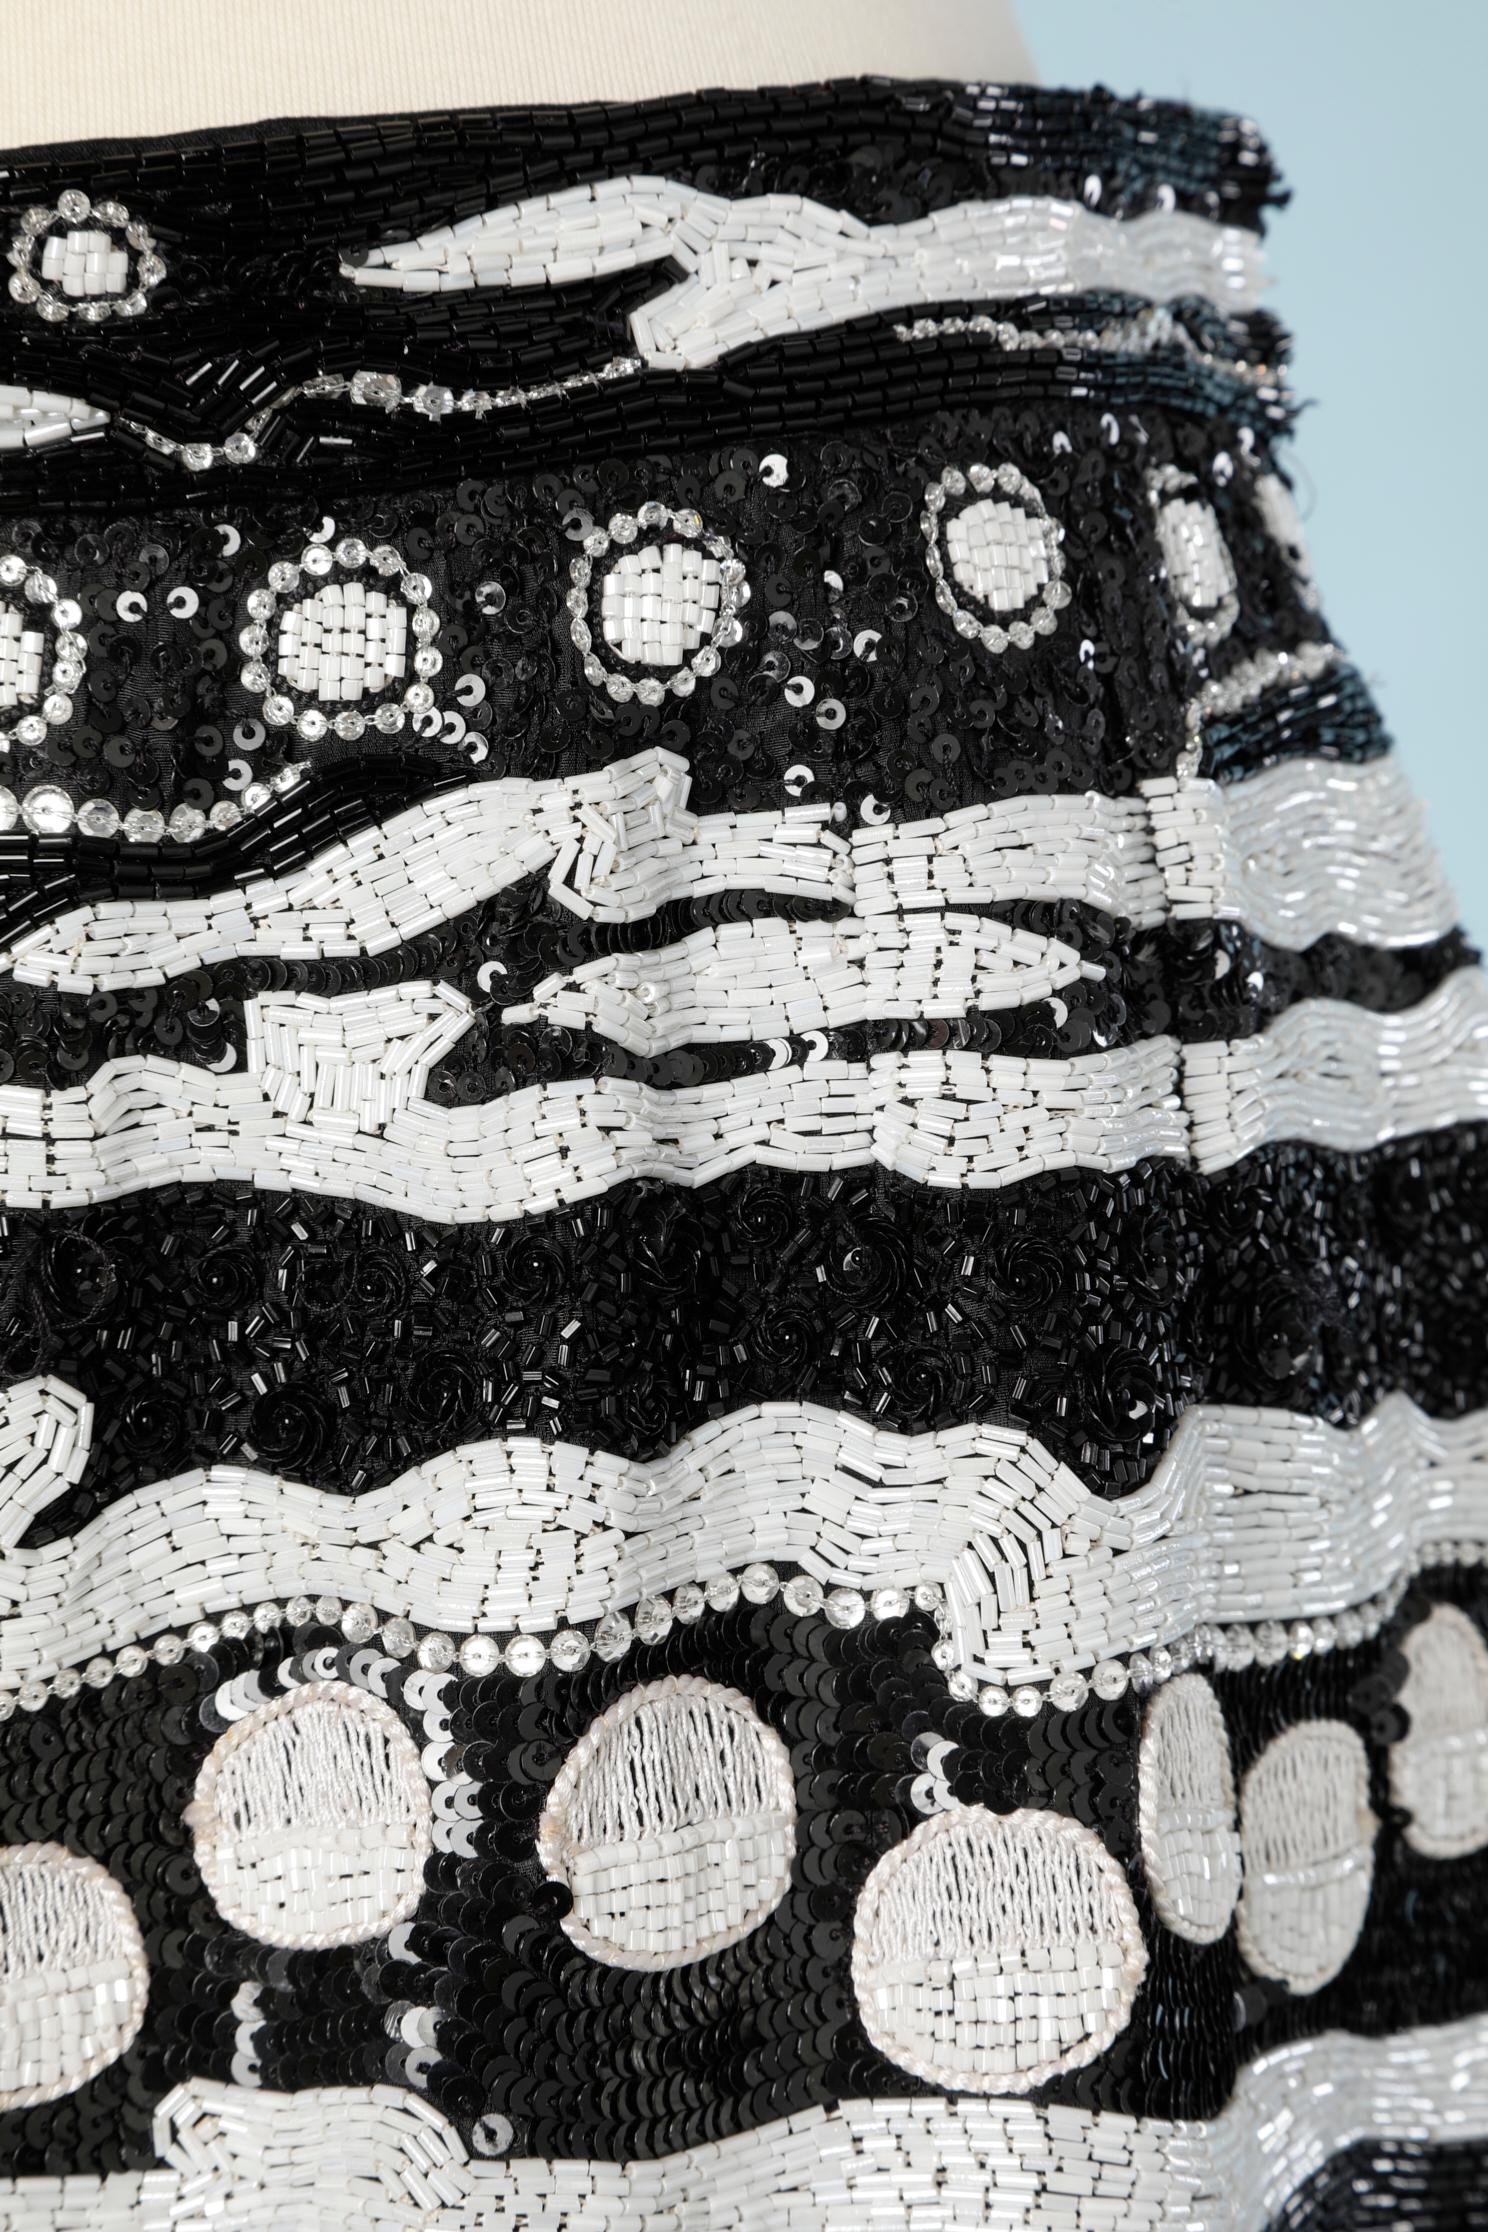 Black and white fully beaded evening skirt.
SIZE 12